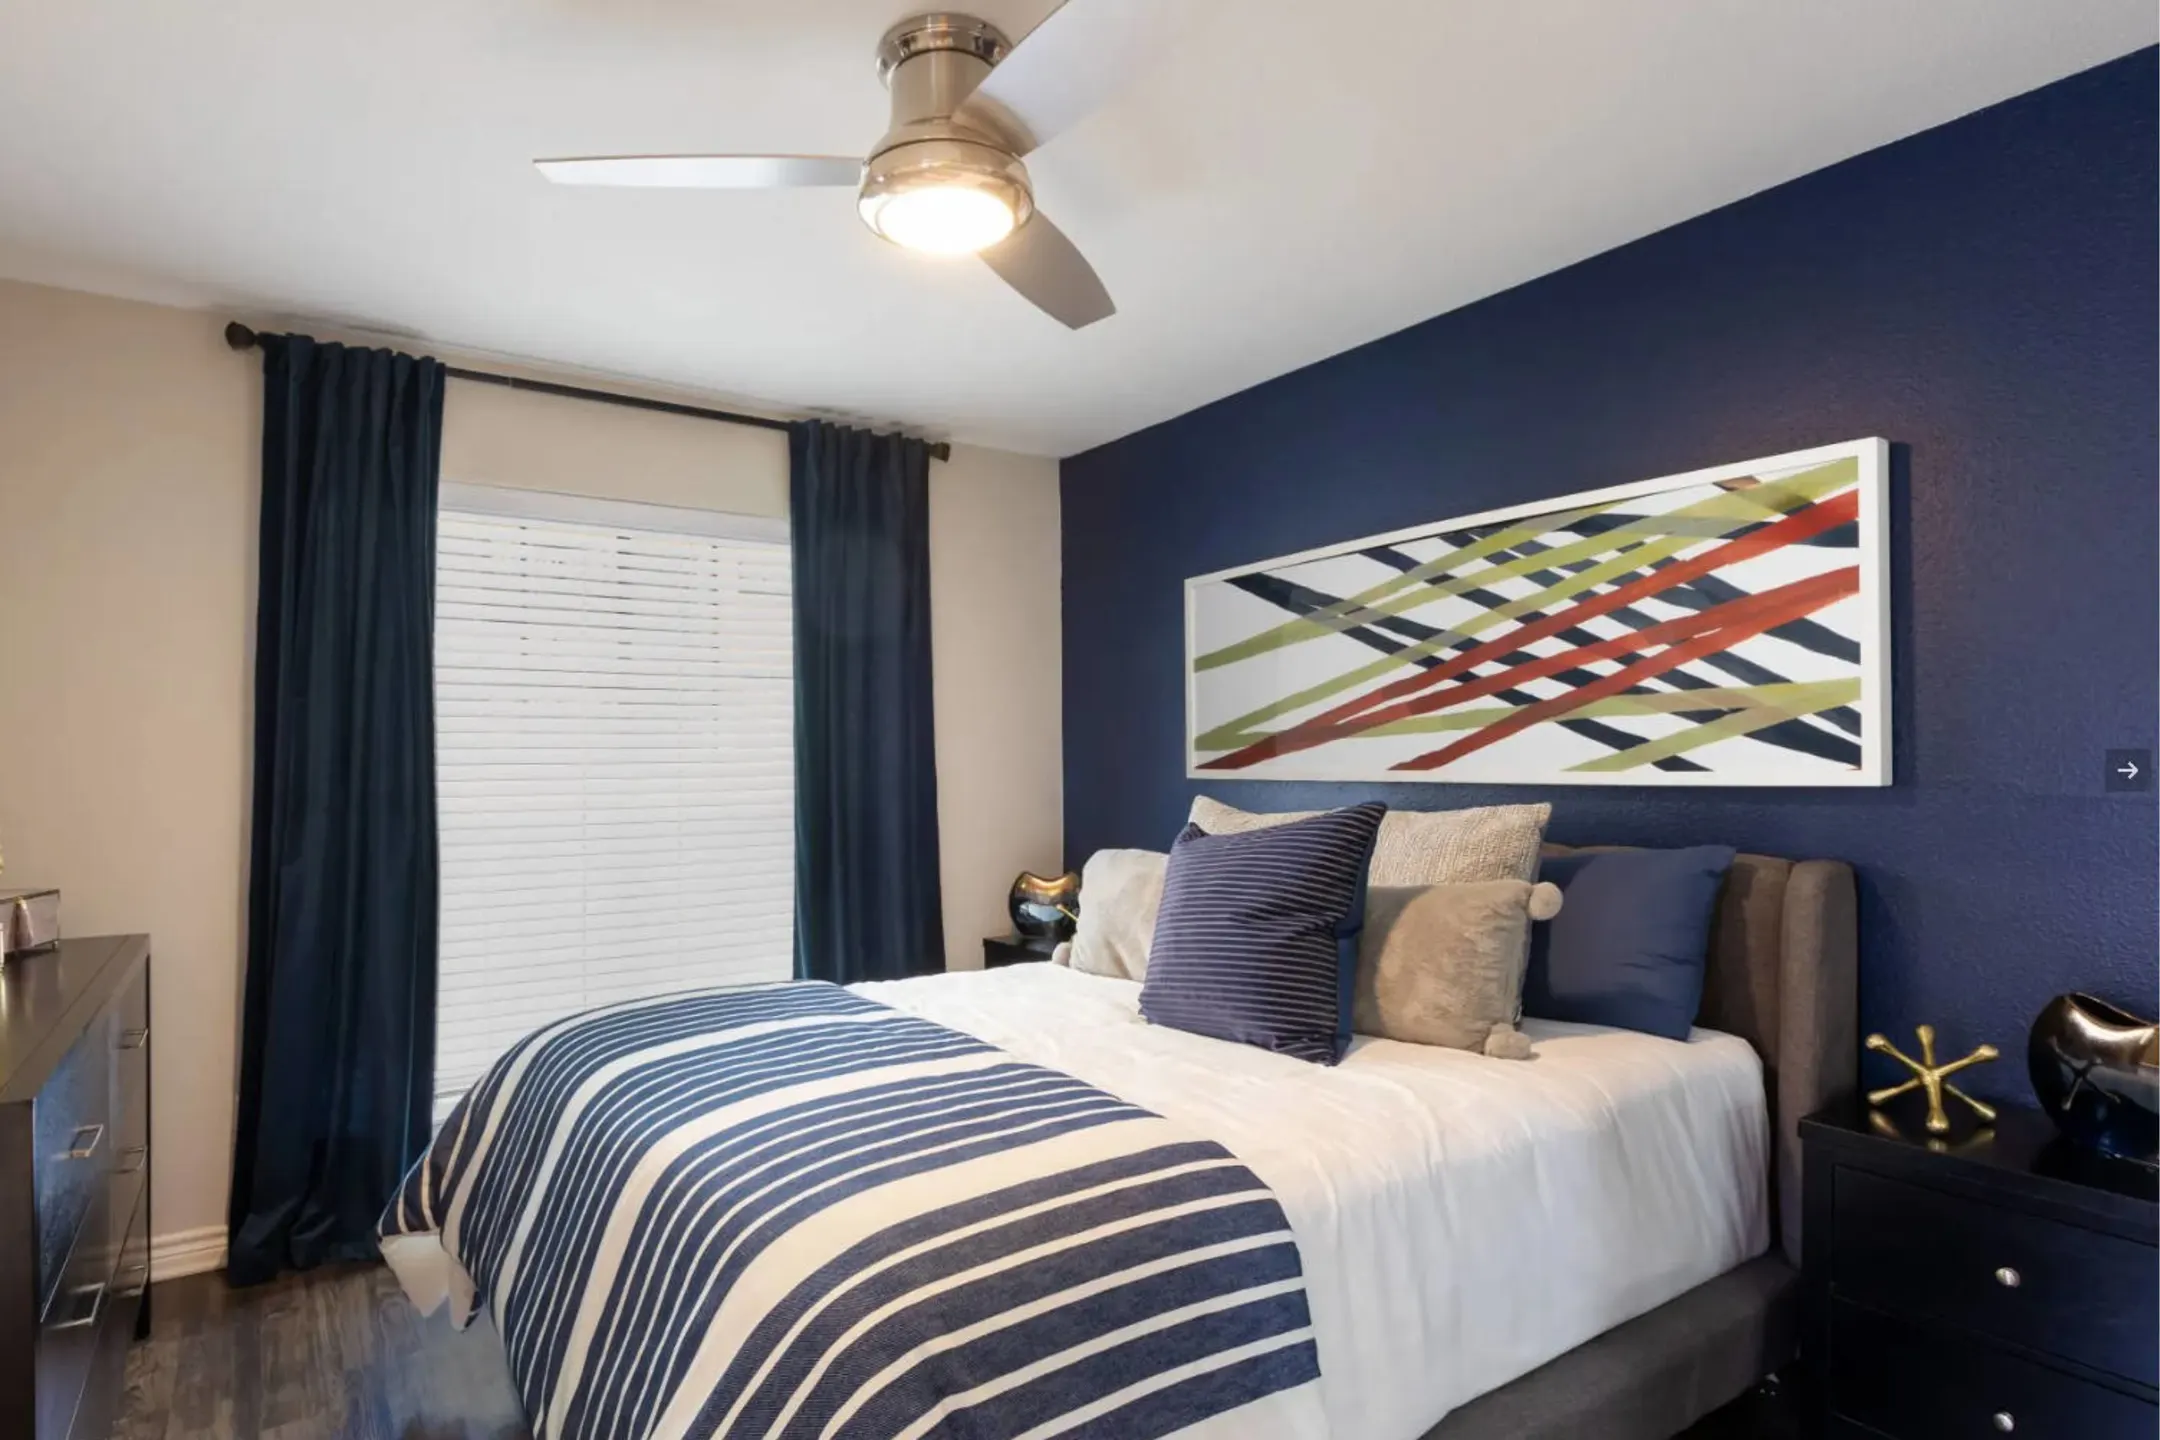 Bedroom - 77042 Luxury Properties - Houston, TX